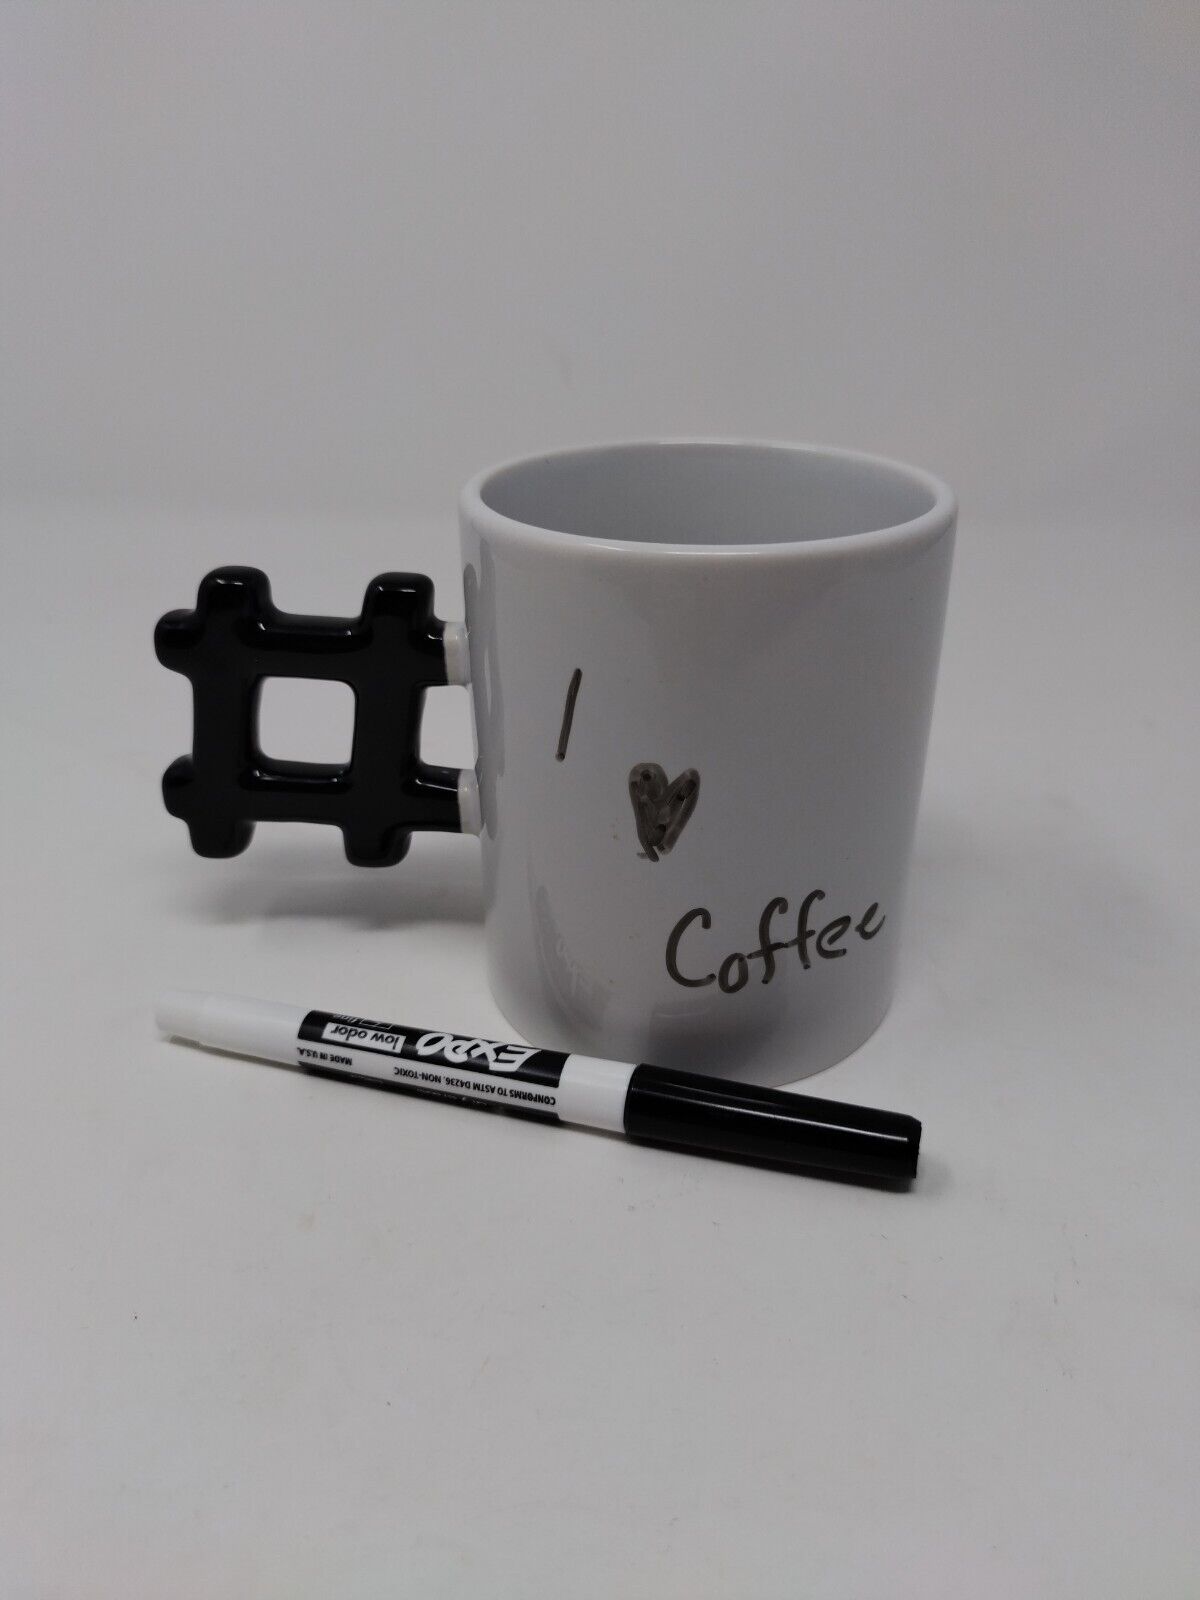 Cool Trendy Hashtag # Ceramic Mug or Cup With Dry Erase Marker Kikkerland Brand